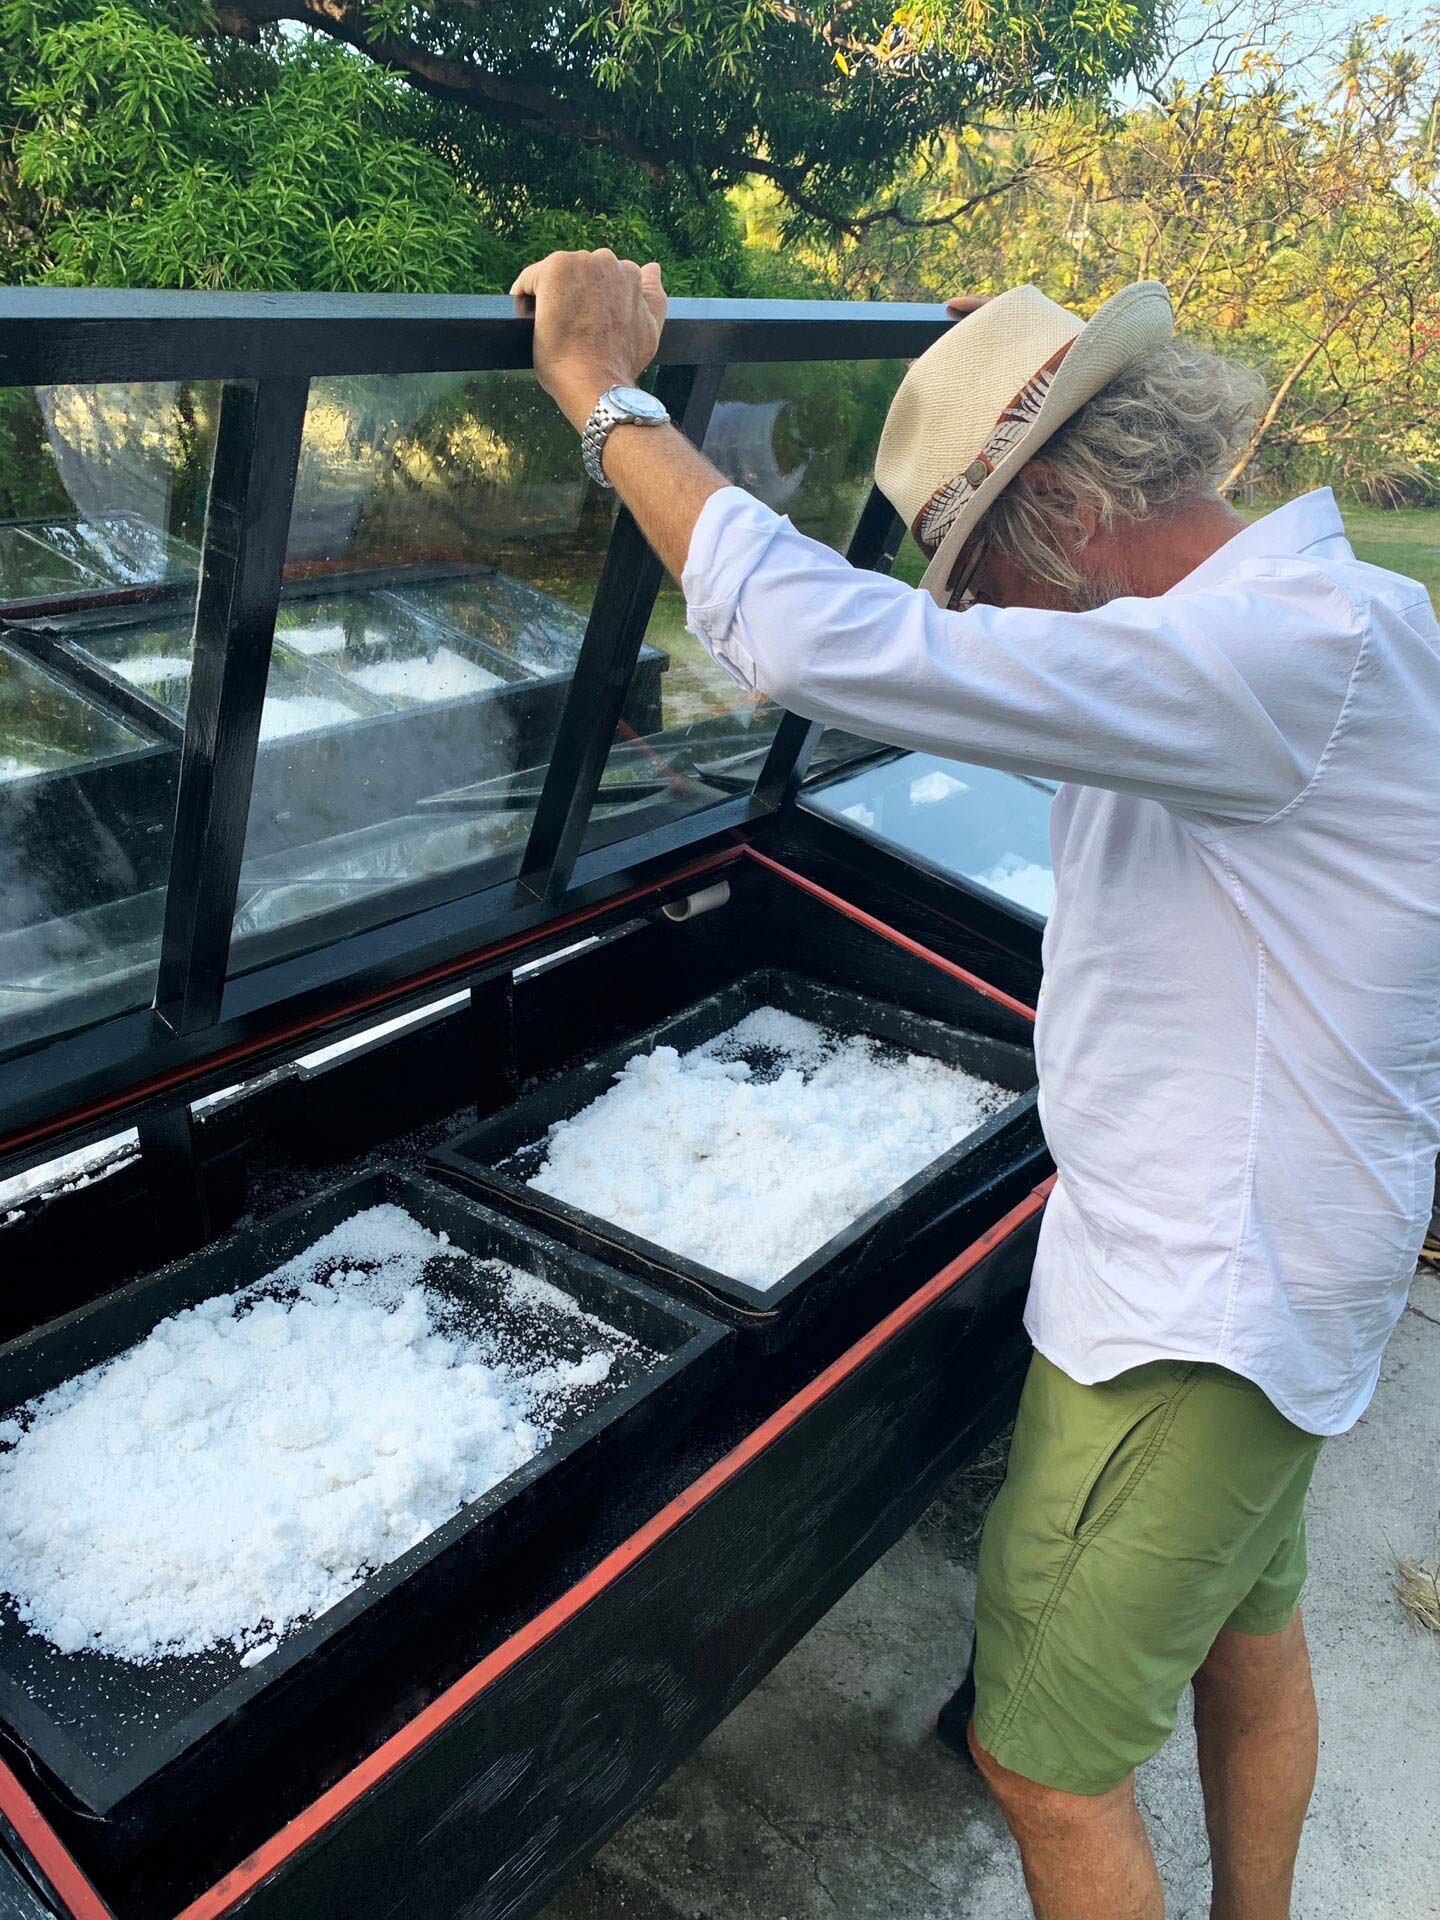 Jerry examining solar evaporated sea salt